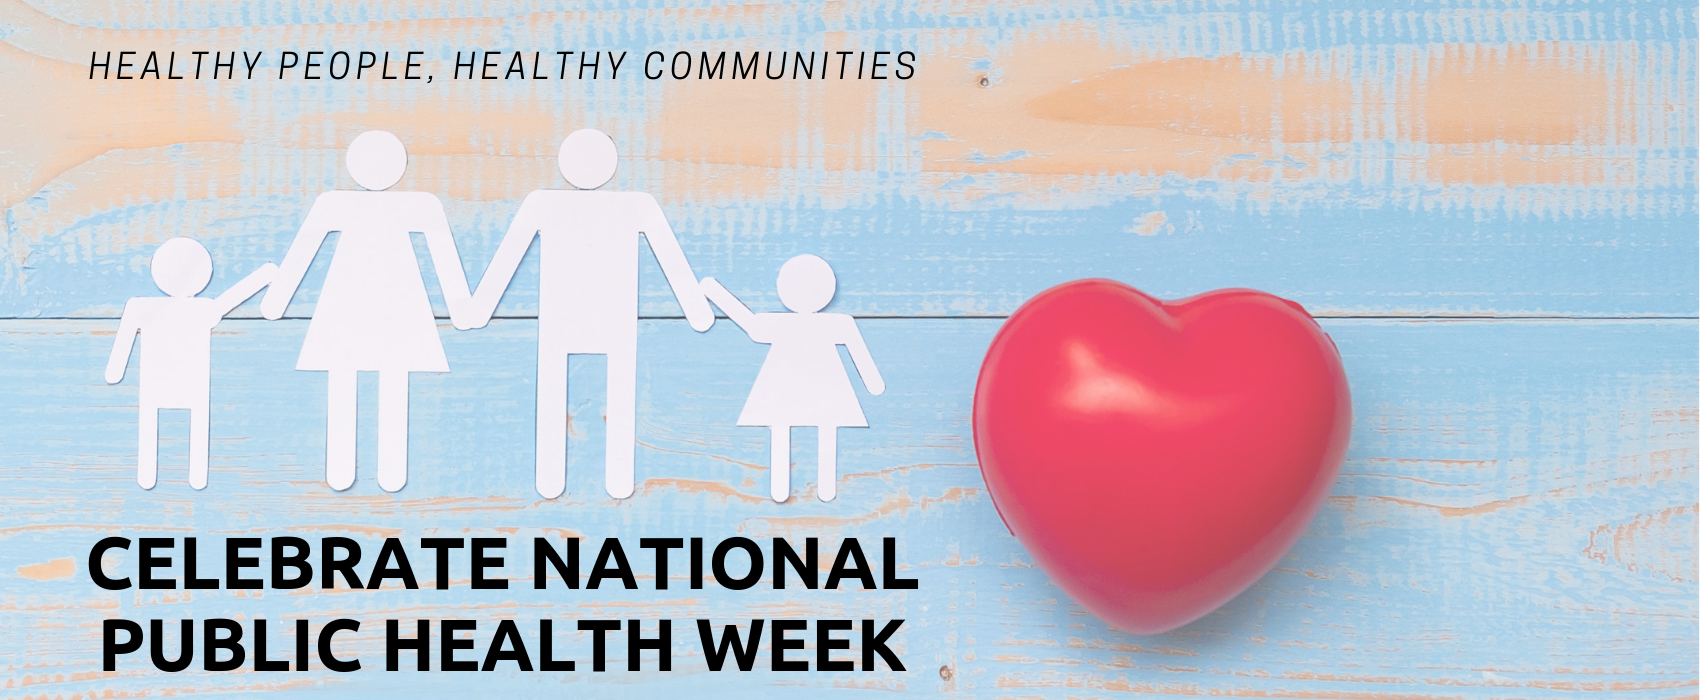 Celebrate National Public Health Week!